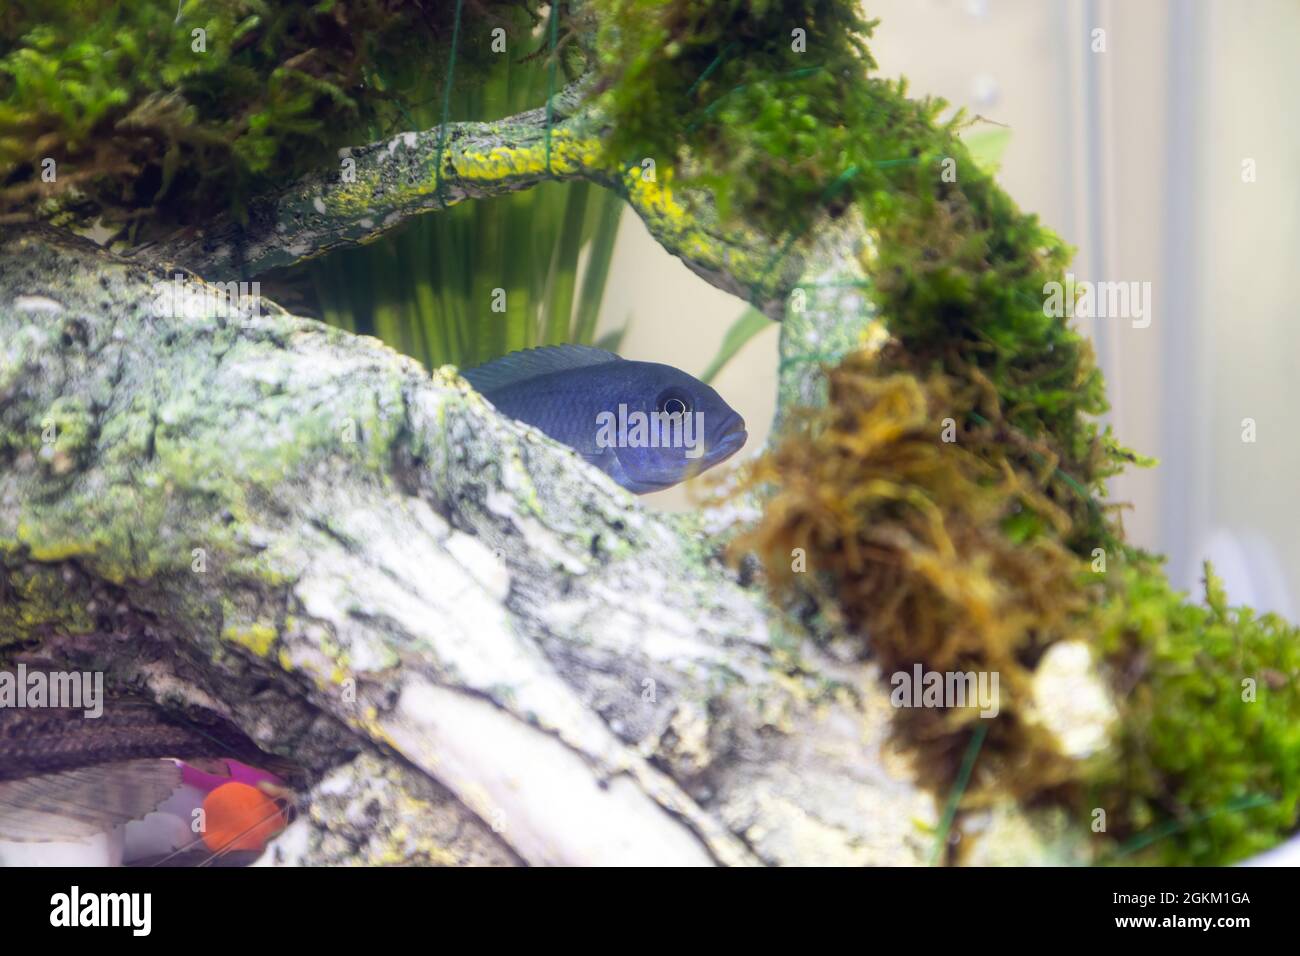 A juvenile blue Malawi Cichlids in a freshwarwe home aquarium Stock Photo